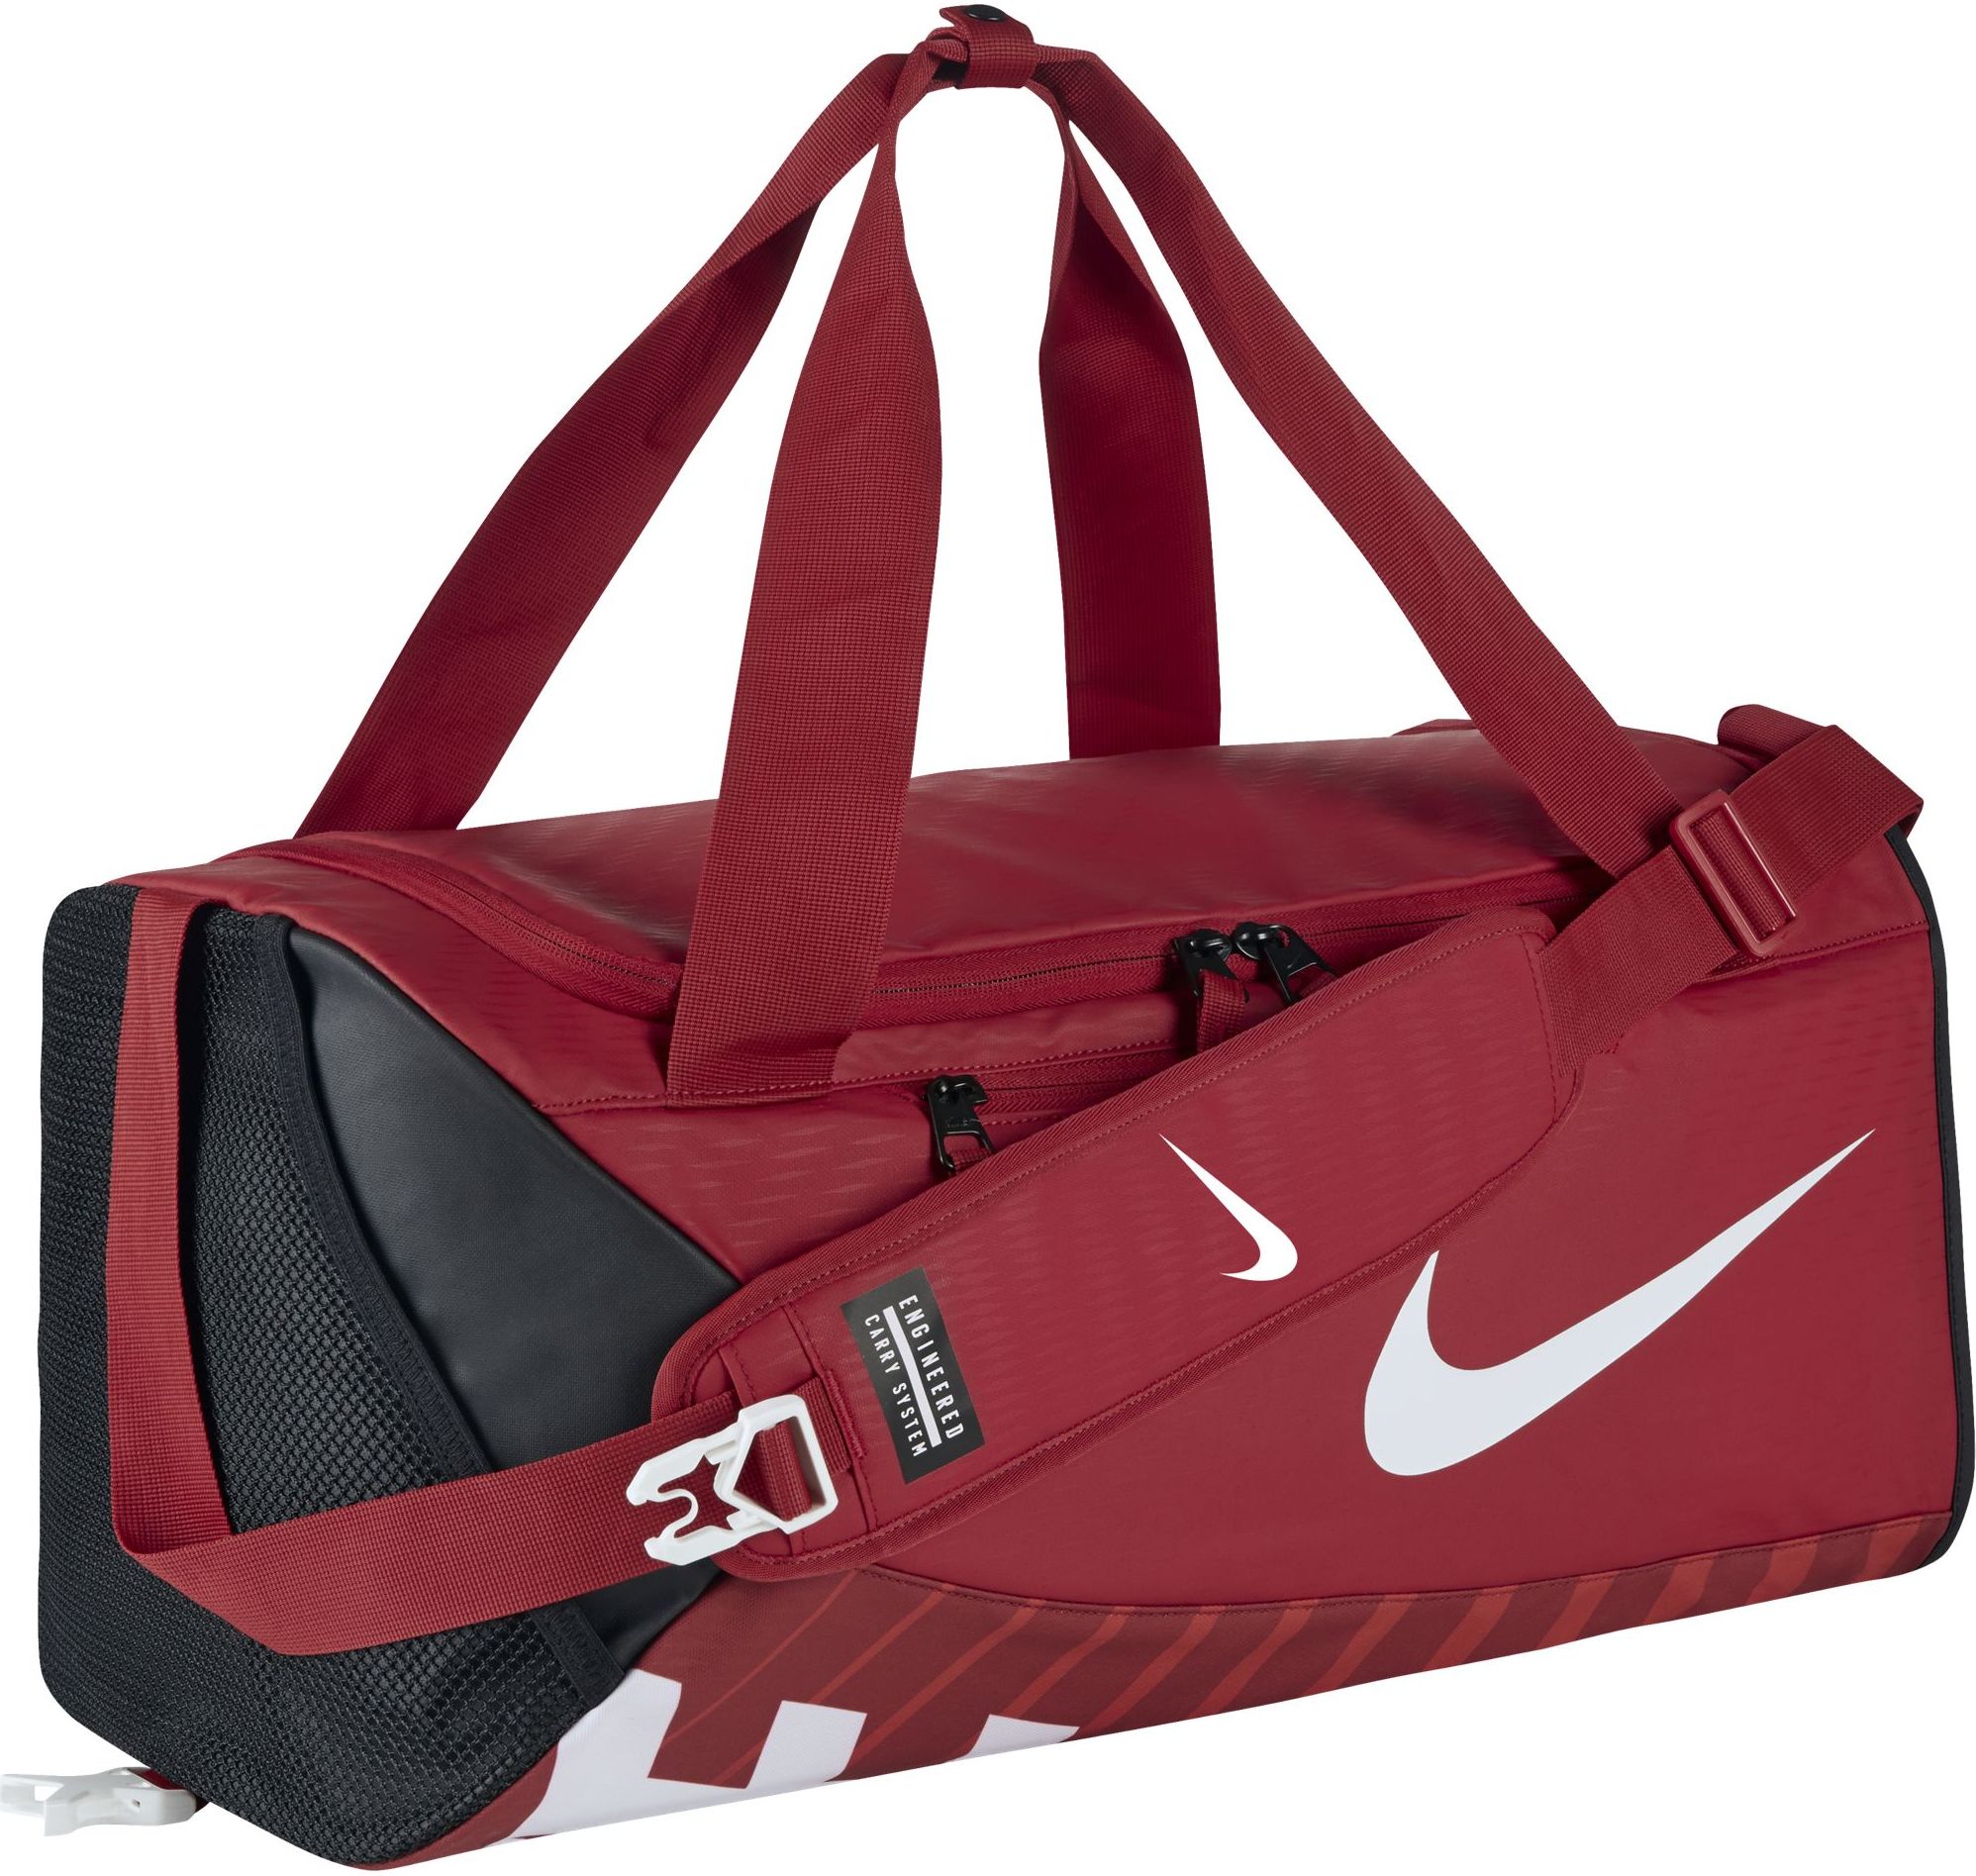 ALPHA ADAPT SMALL - Sporty bag